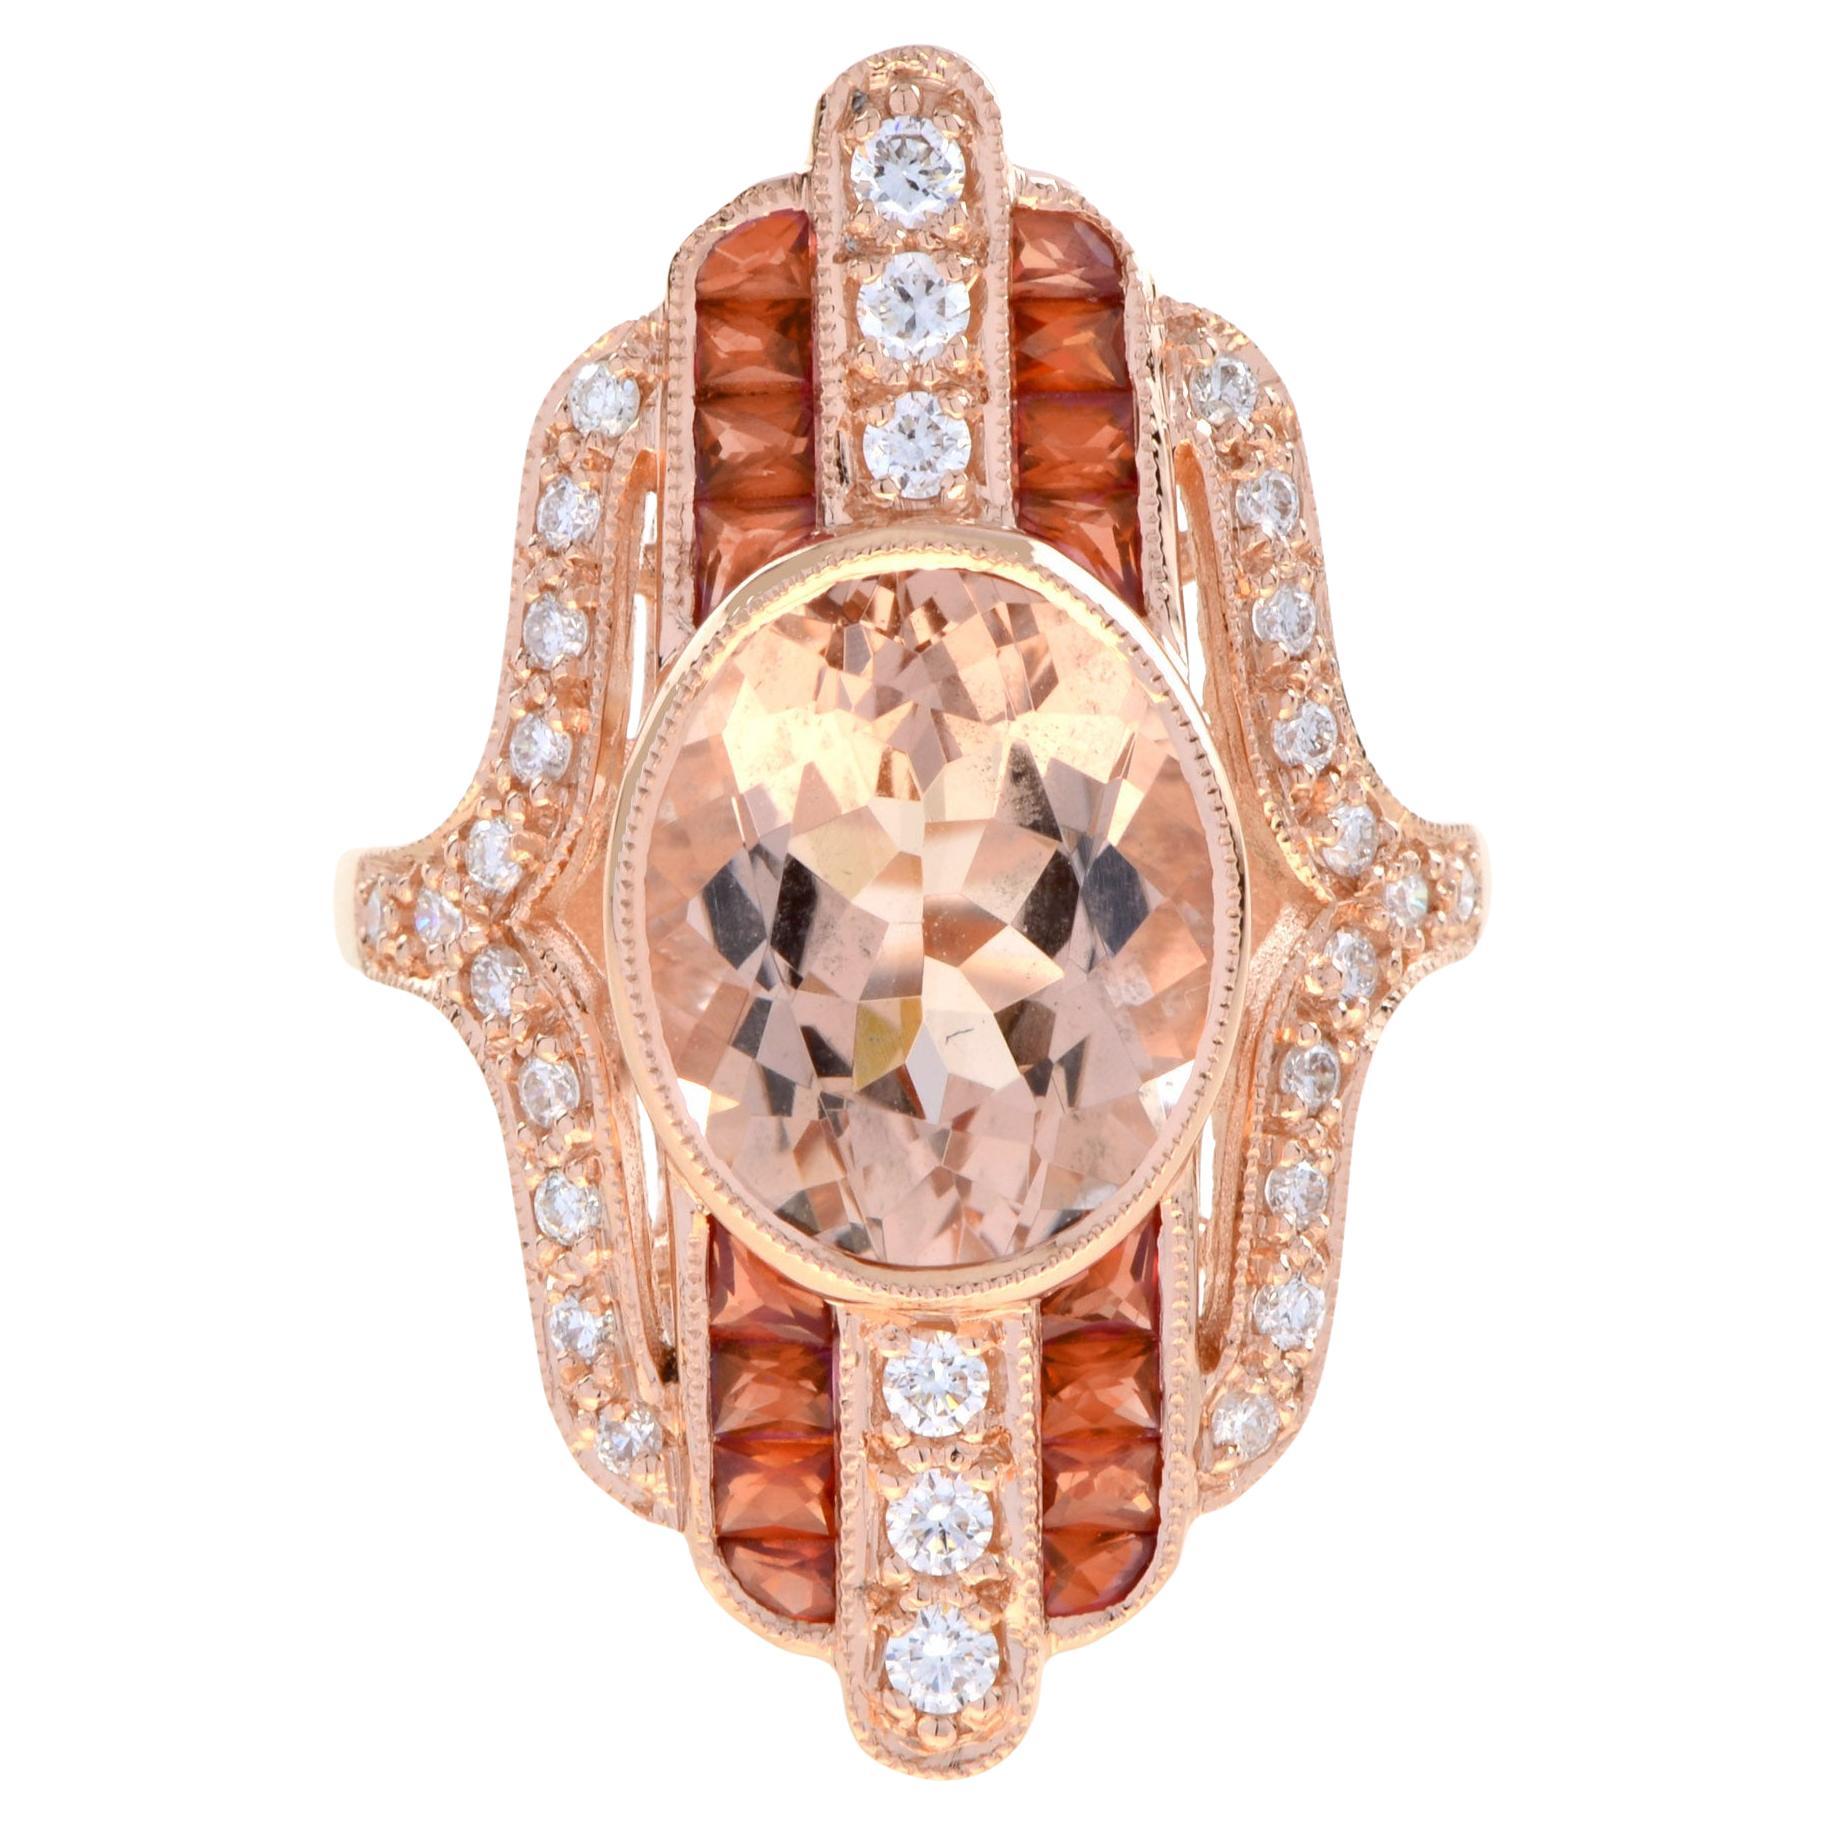 For Sale:  5.50 Ct. Morganite Orange Sapphire Diamond Art Deco Style Ring in 18K Rose Gold